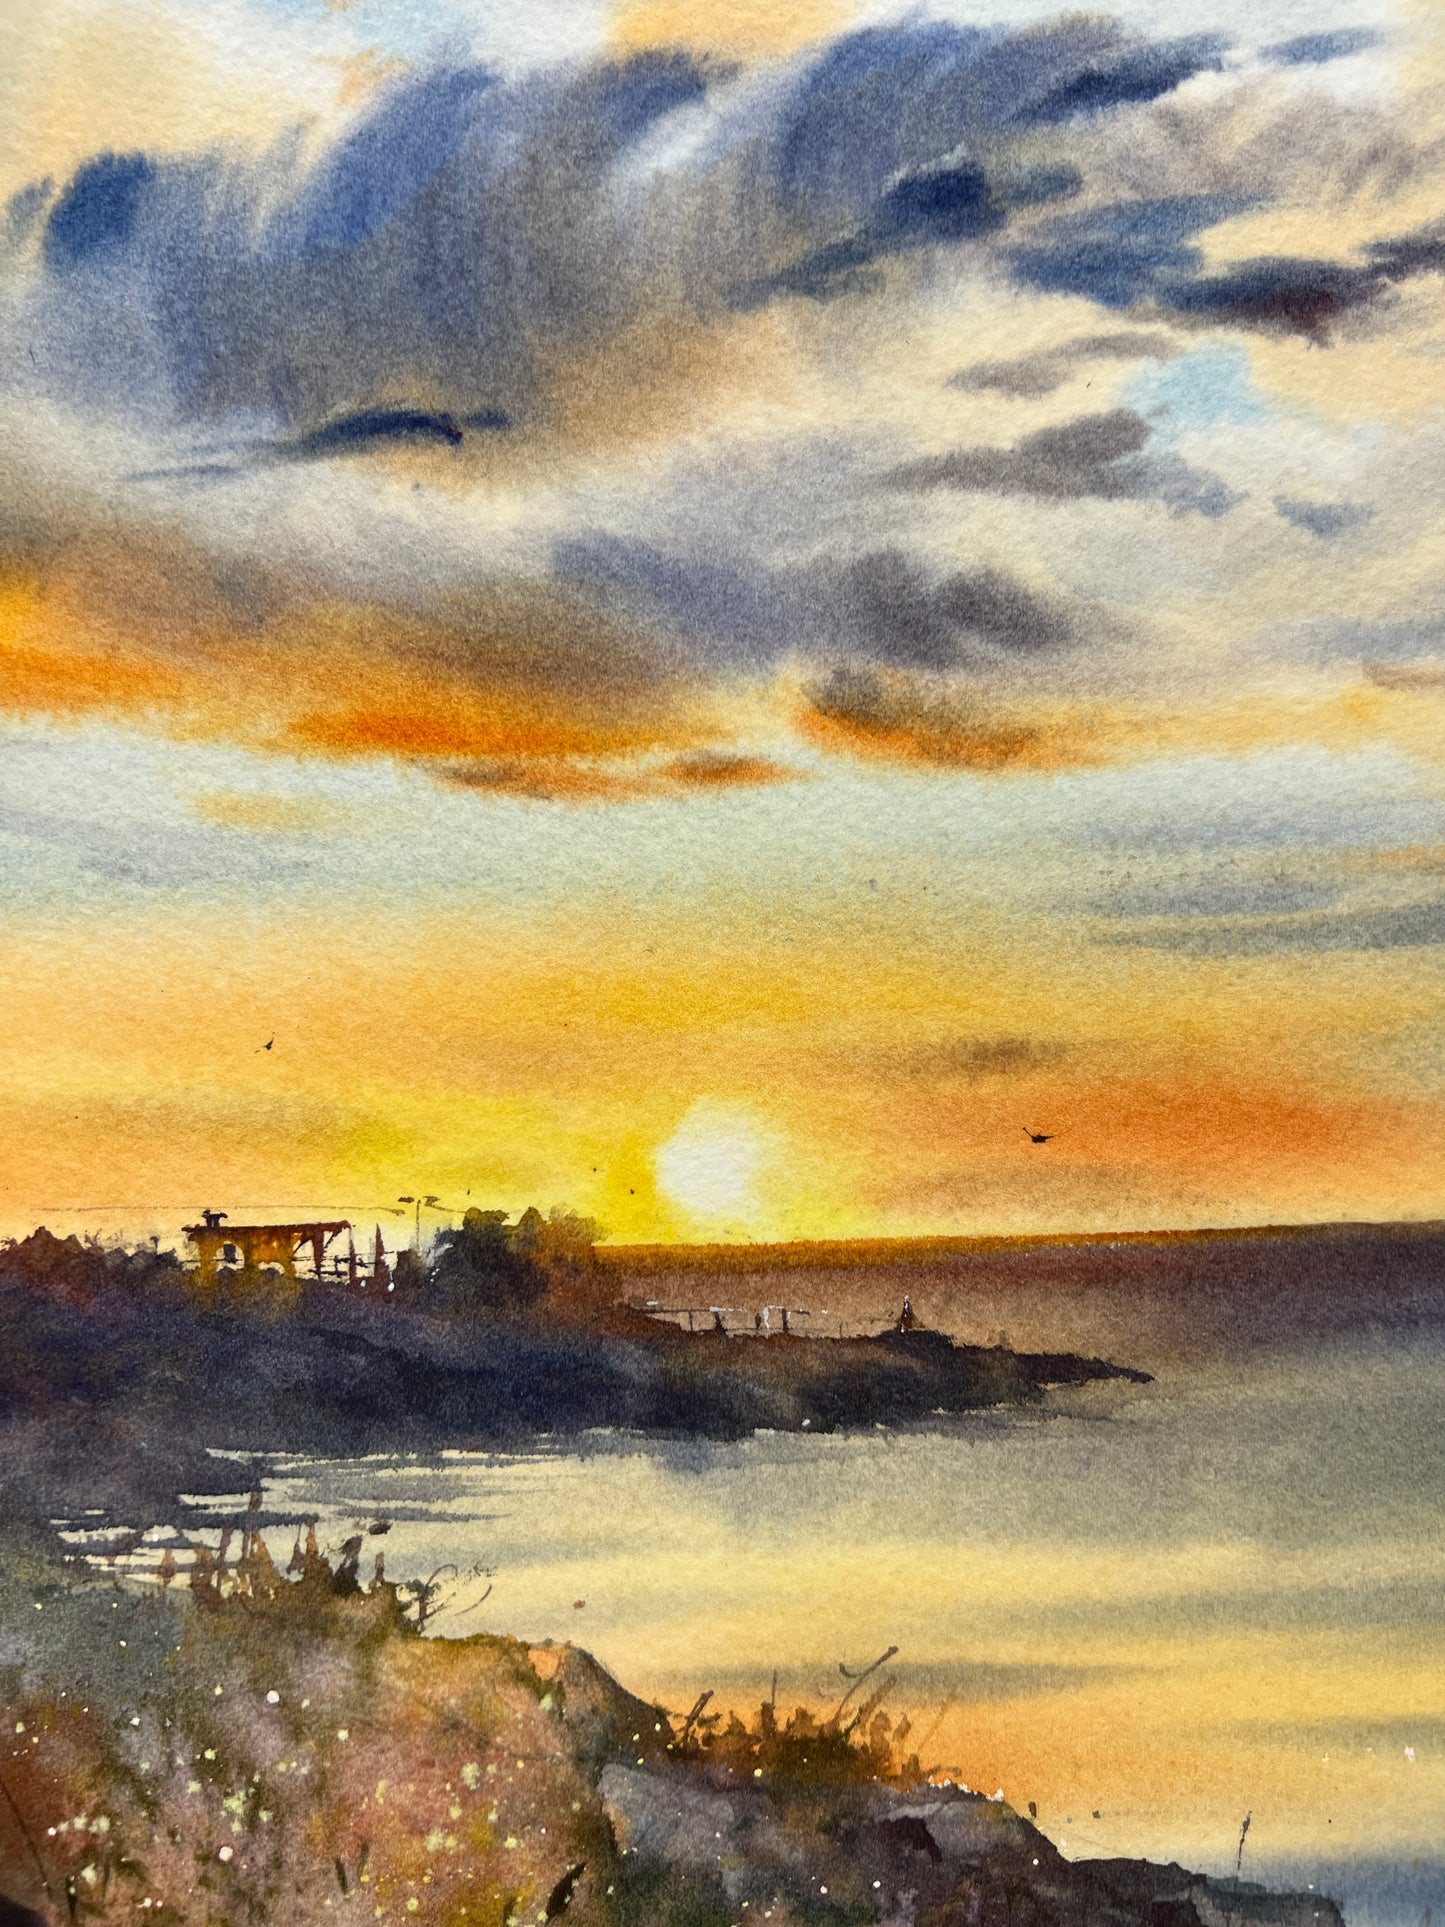 Sunset in Cyprus Coastal Landscape - Original Watercolor Painting